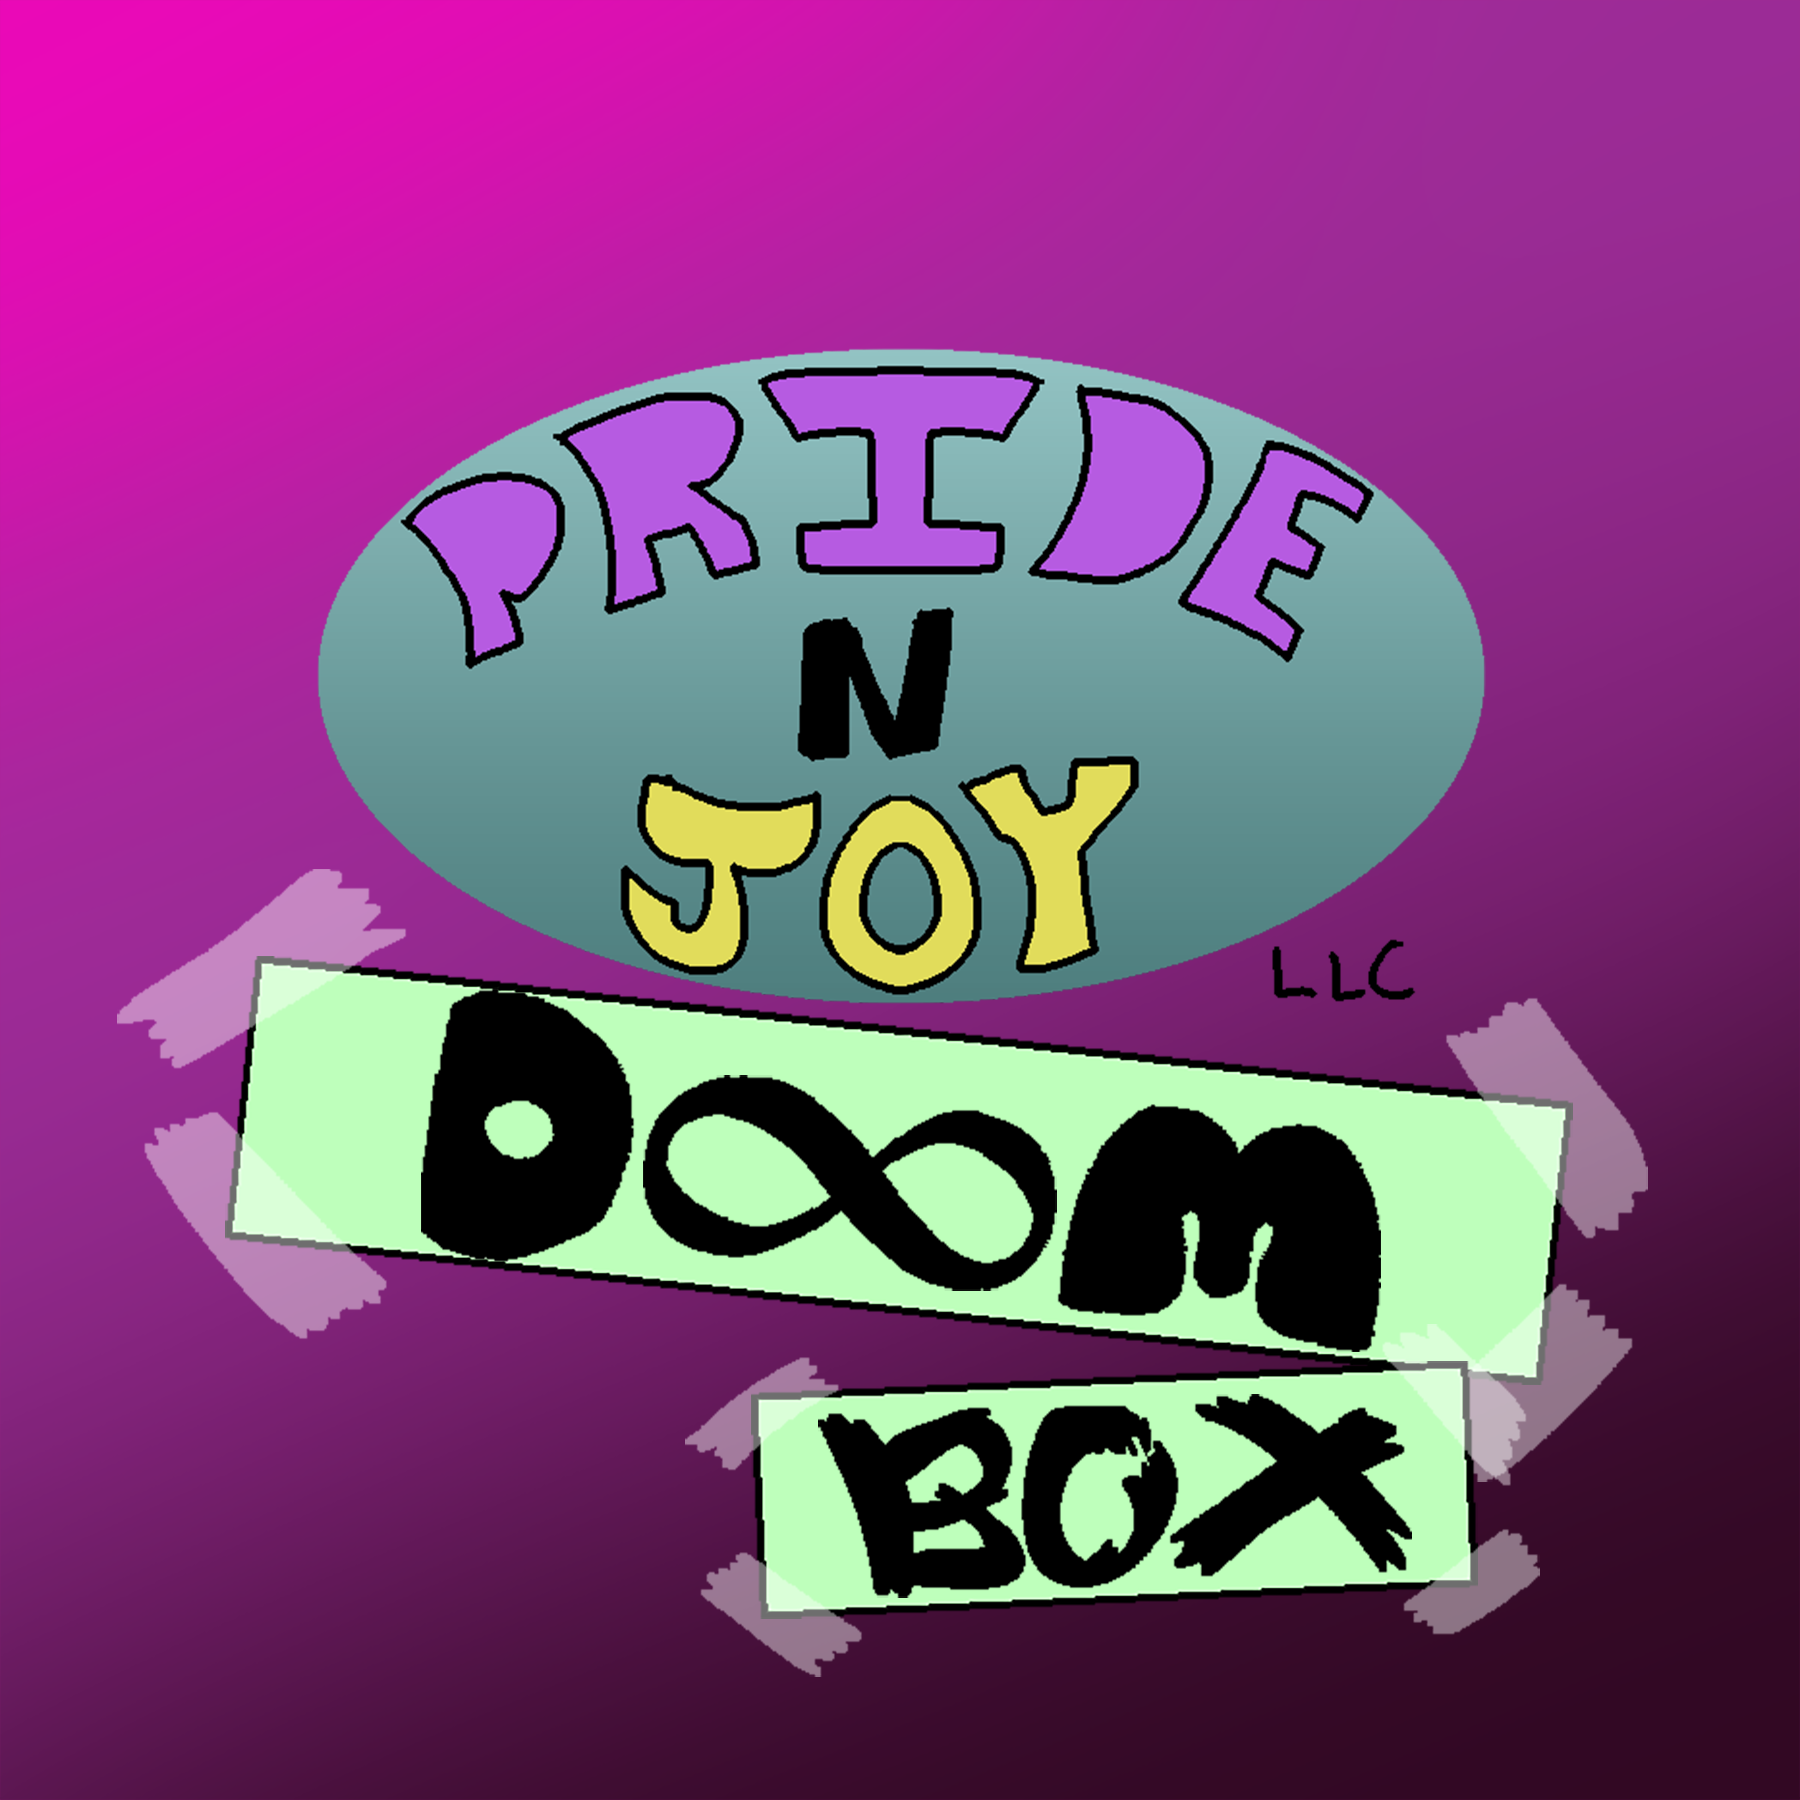 A Logo that says 'Pride N Joy Doom Box' on a purple gradient background.